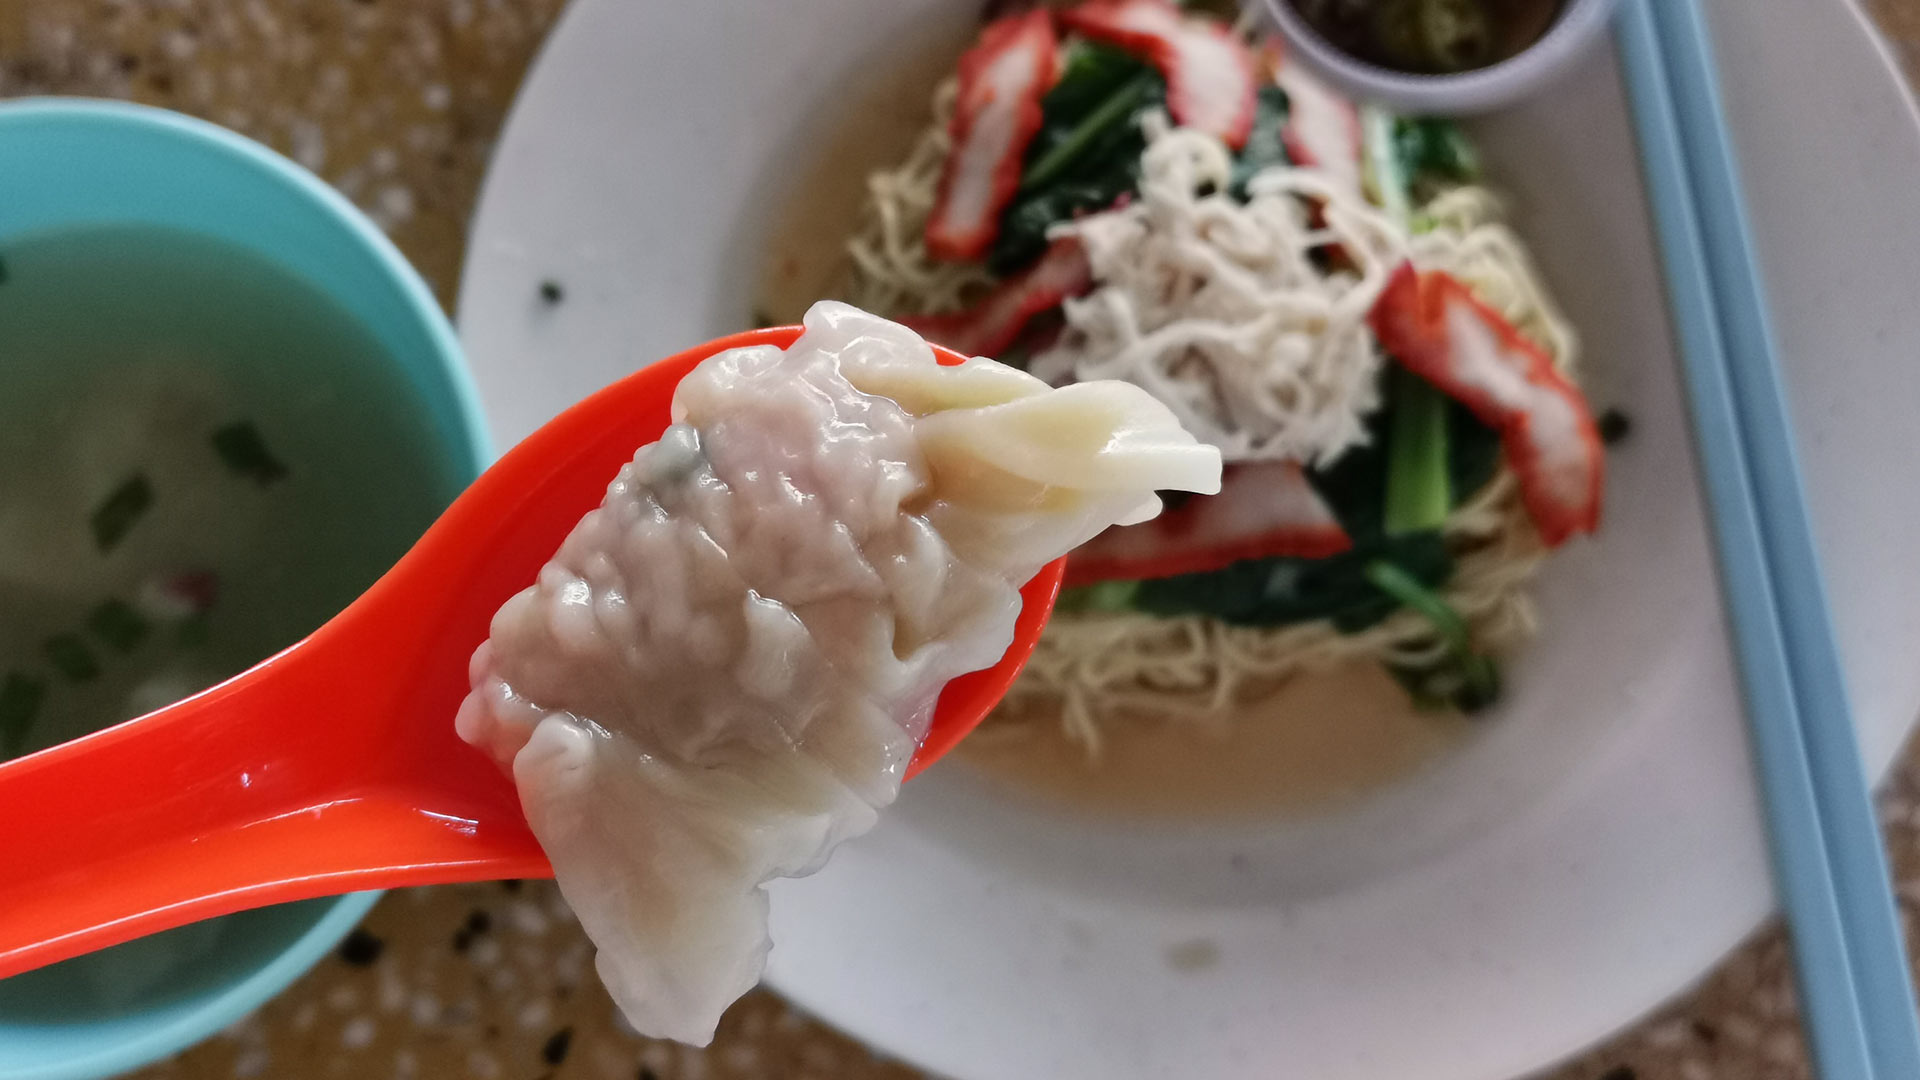 水餃子麺 【水饺面】 Sui Kow mee / Chinese Dumpling Soup